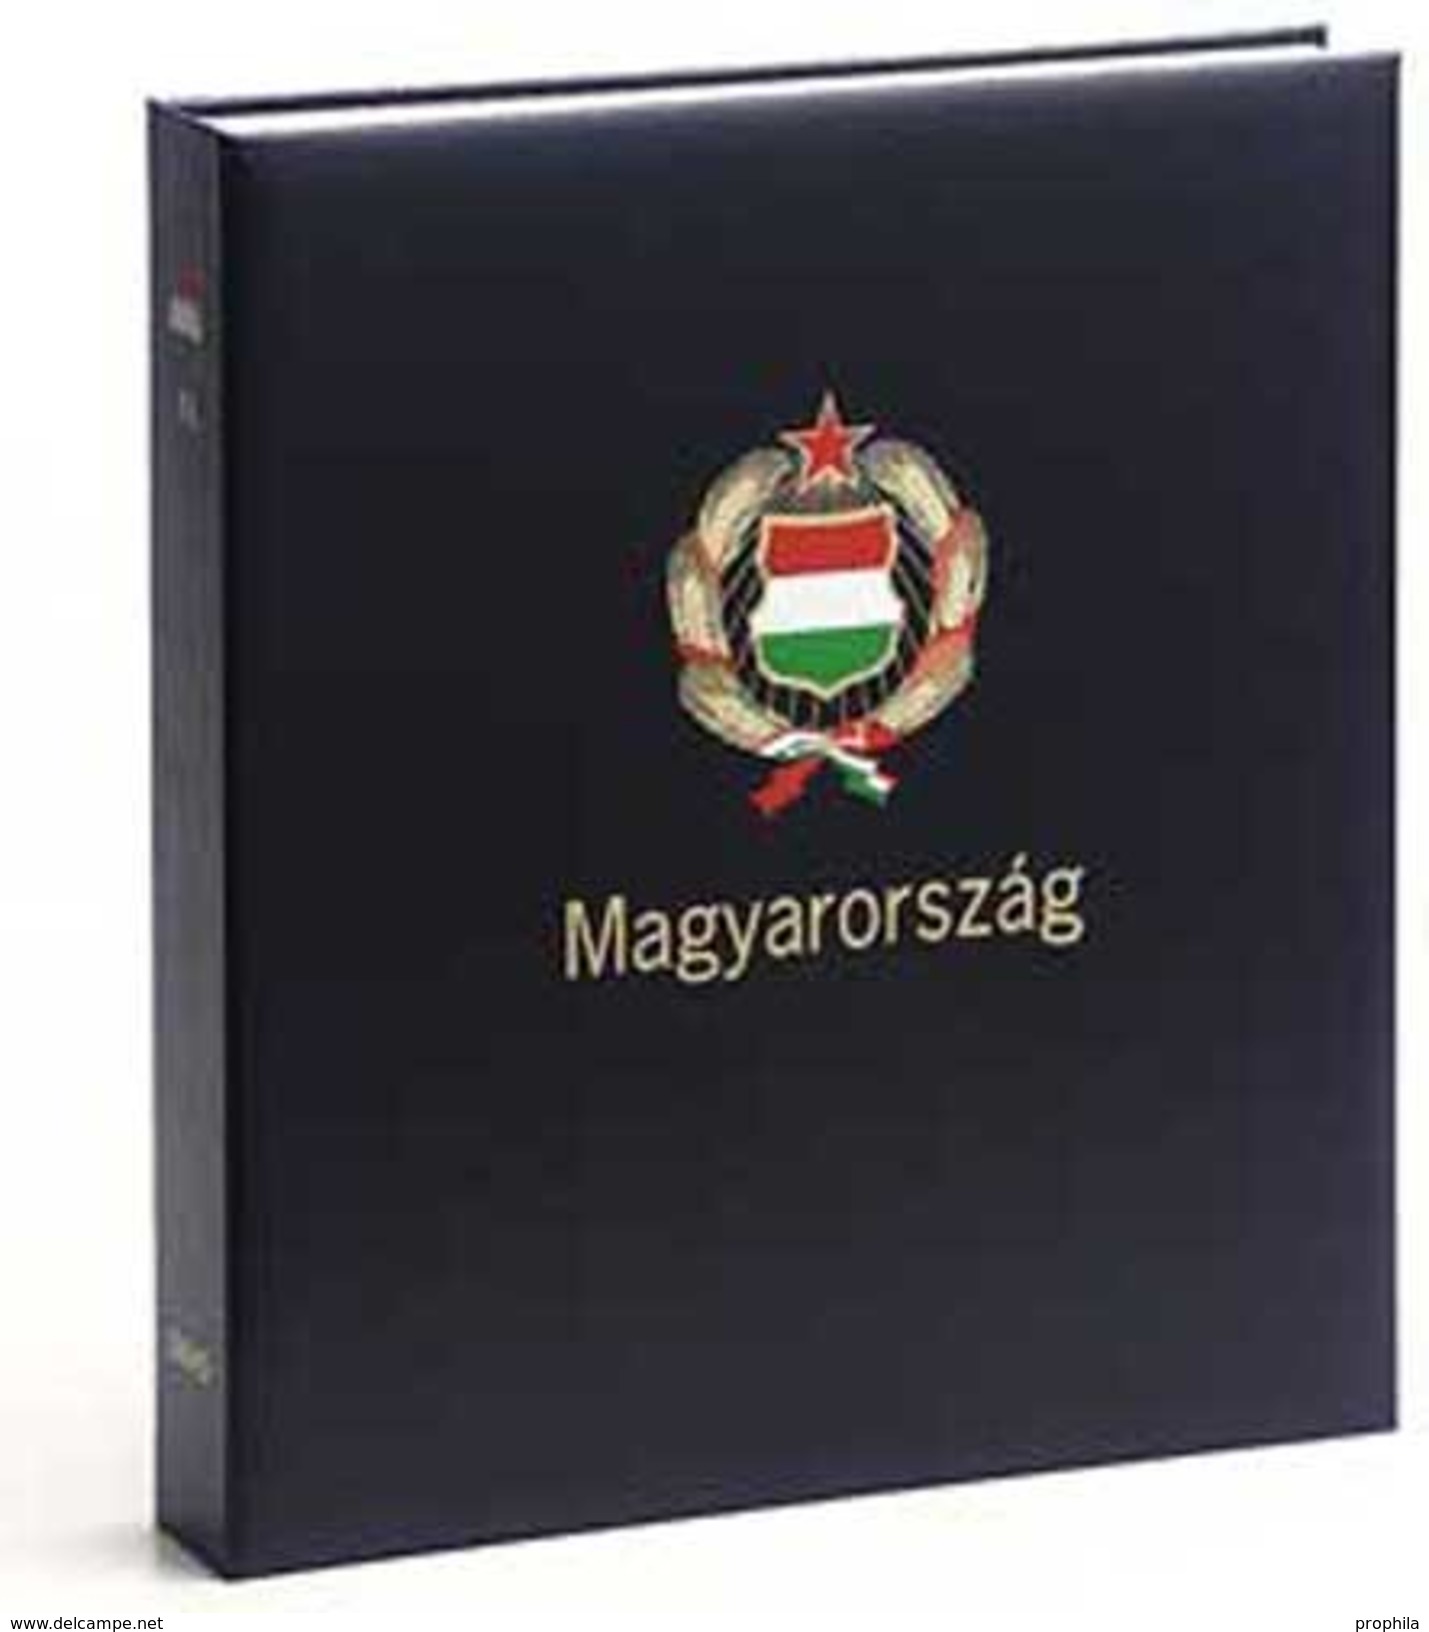 DAVO 15541 Luxus Binder Briefmarkenalbum Ungarn VI - Large Format, Black Pages